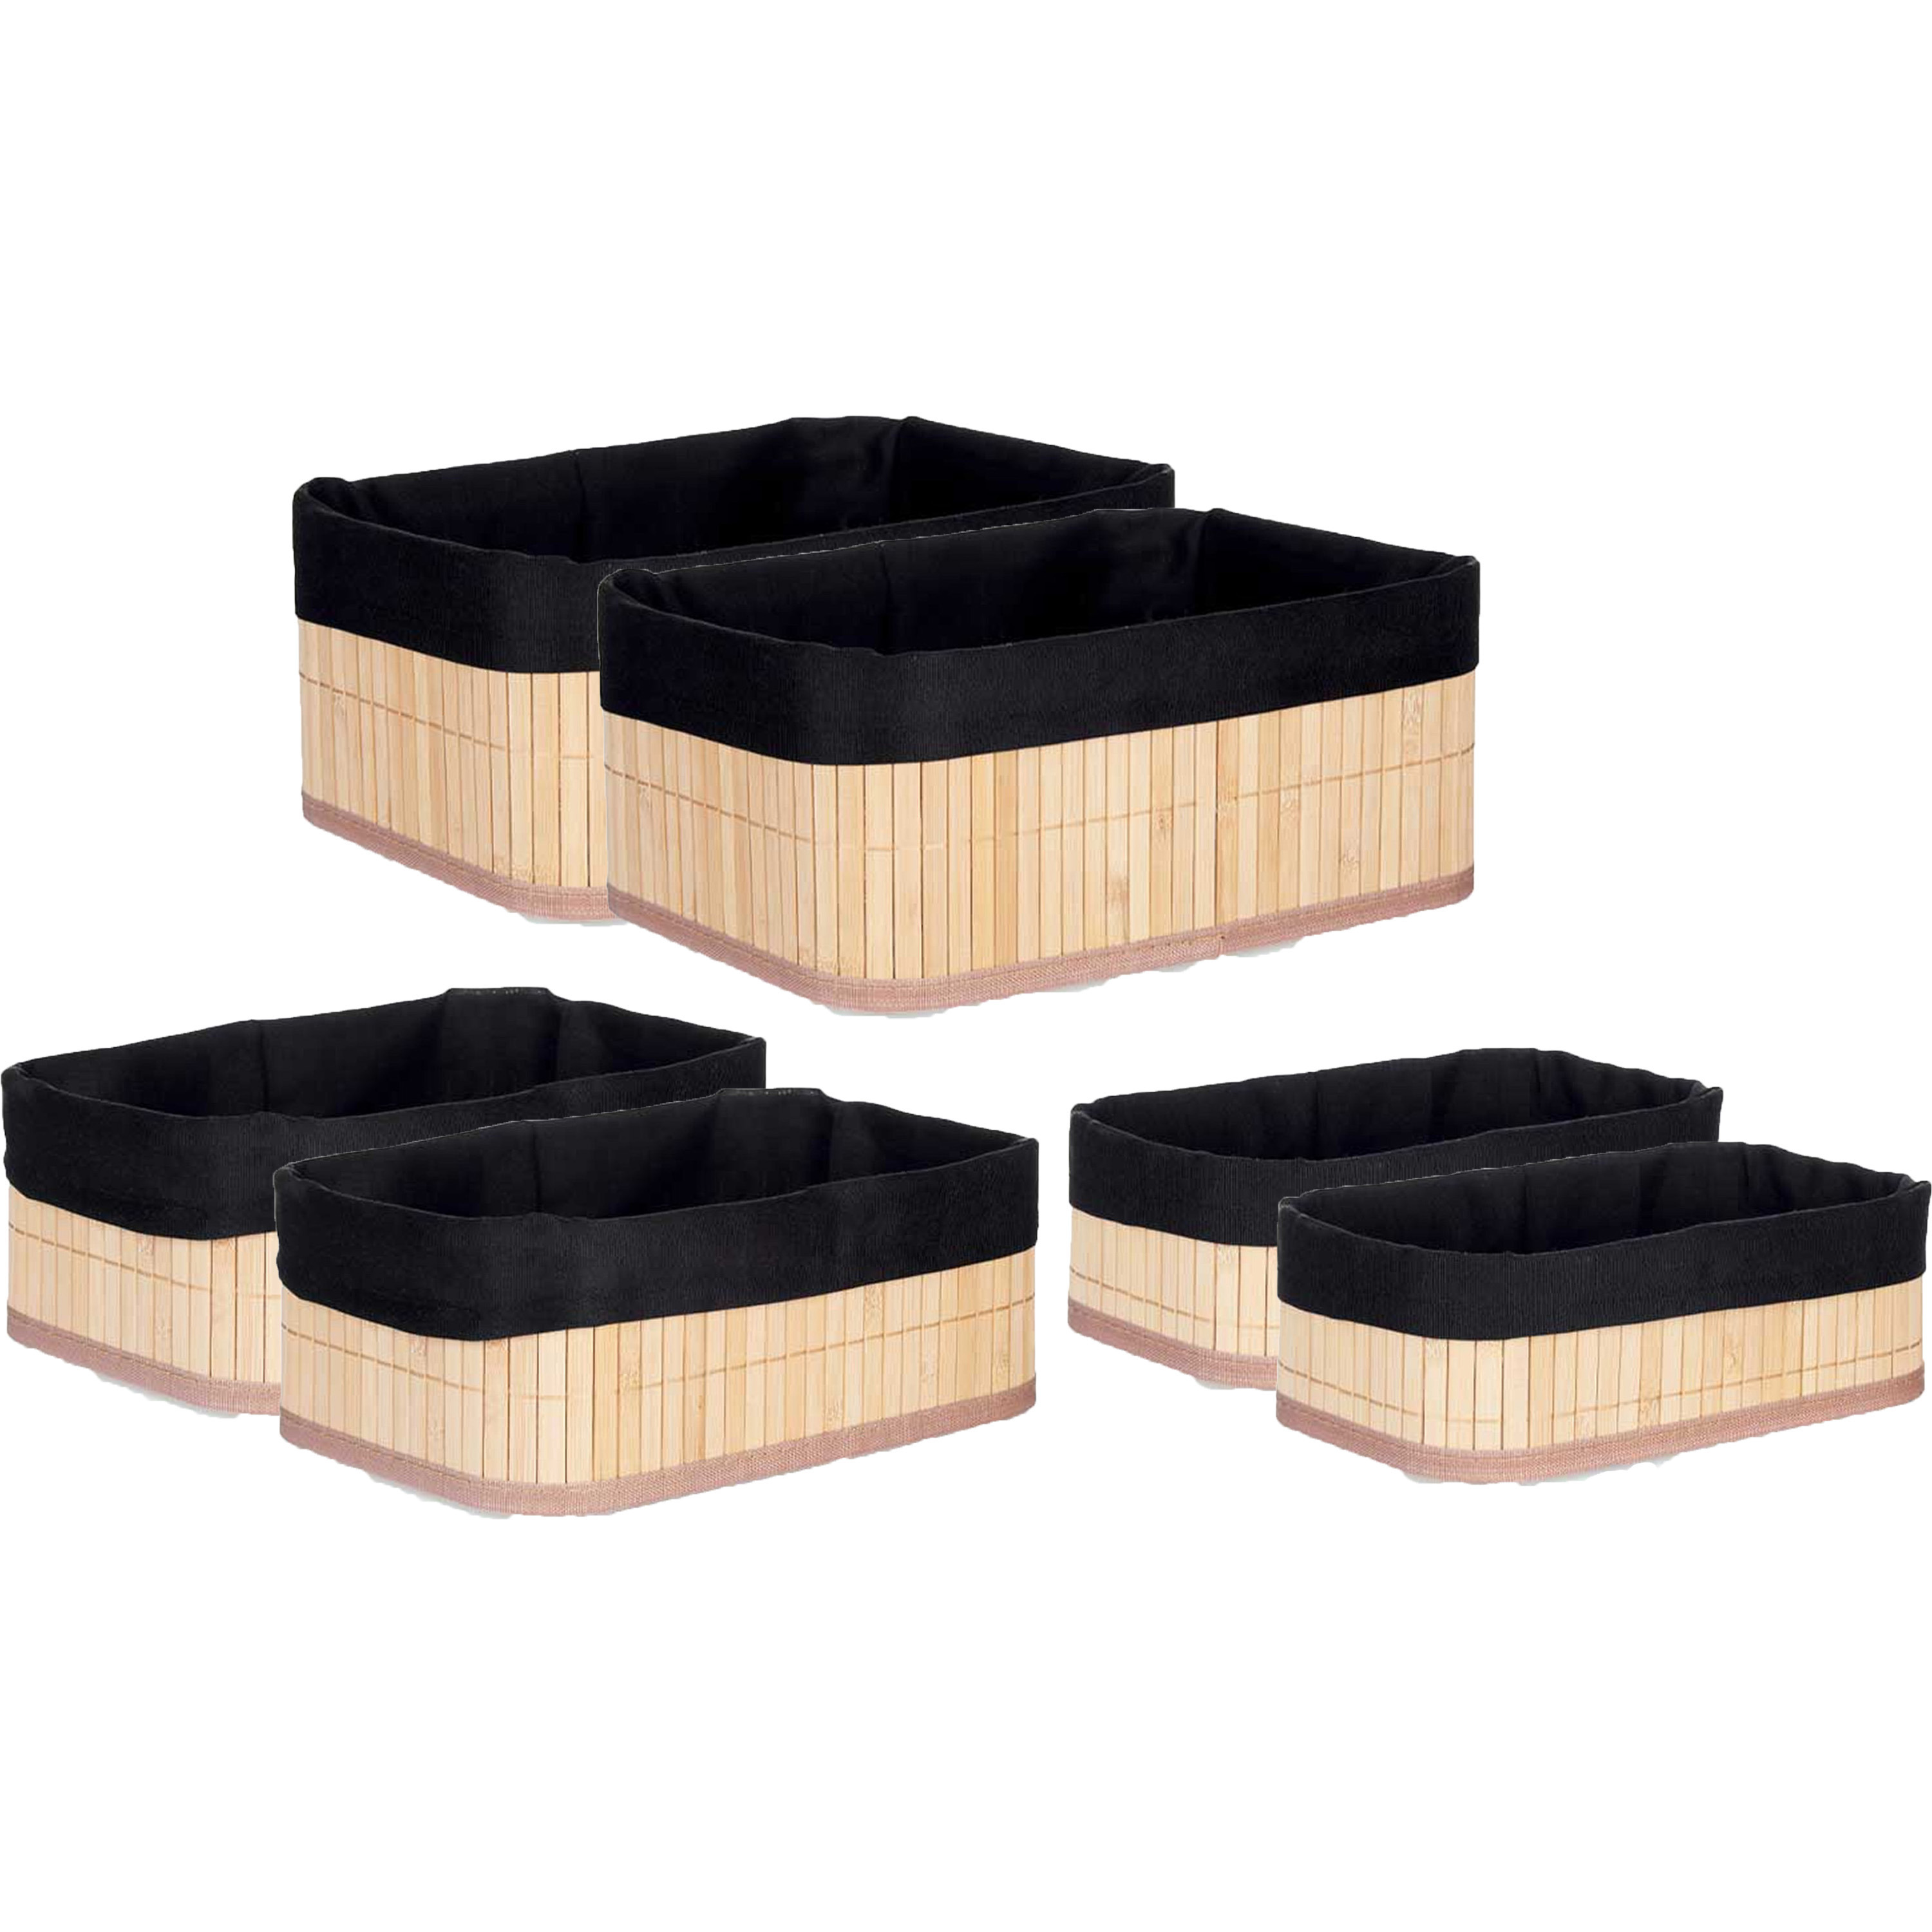 Kipit Badkamer-toilet ruimte opbergmandjes bamboe-stof zwart set 6x stuks